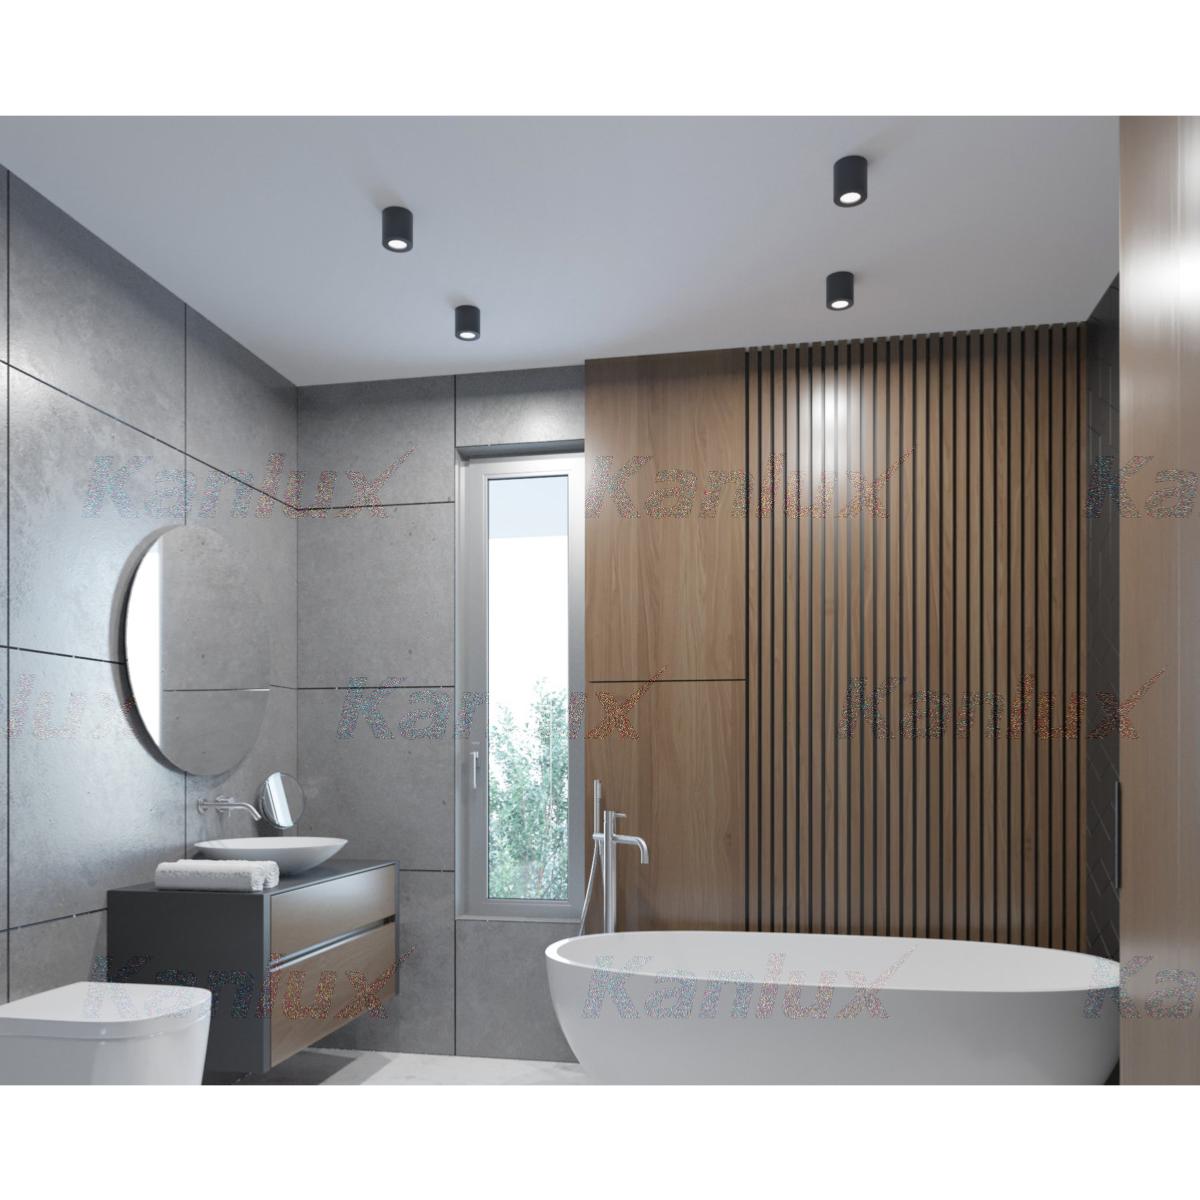 Spot plafond salle de bain moderne noir, Nelis, IP44